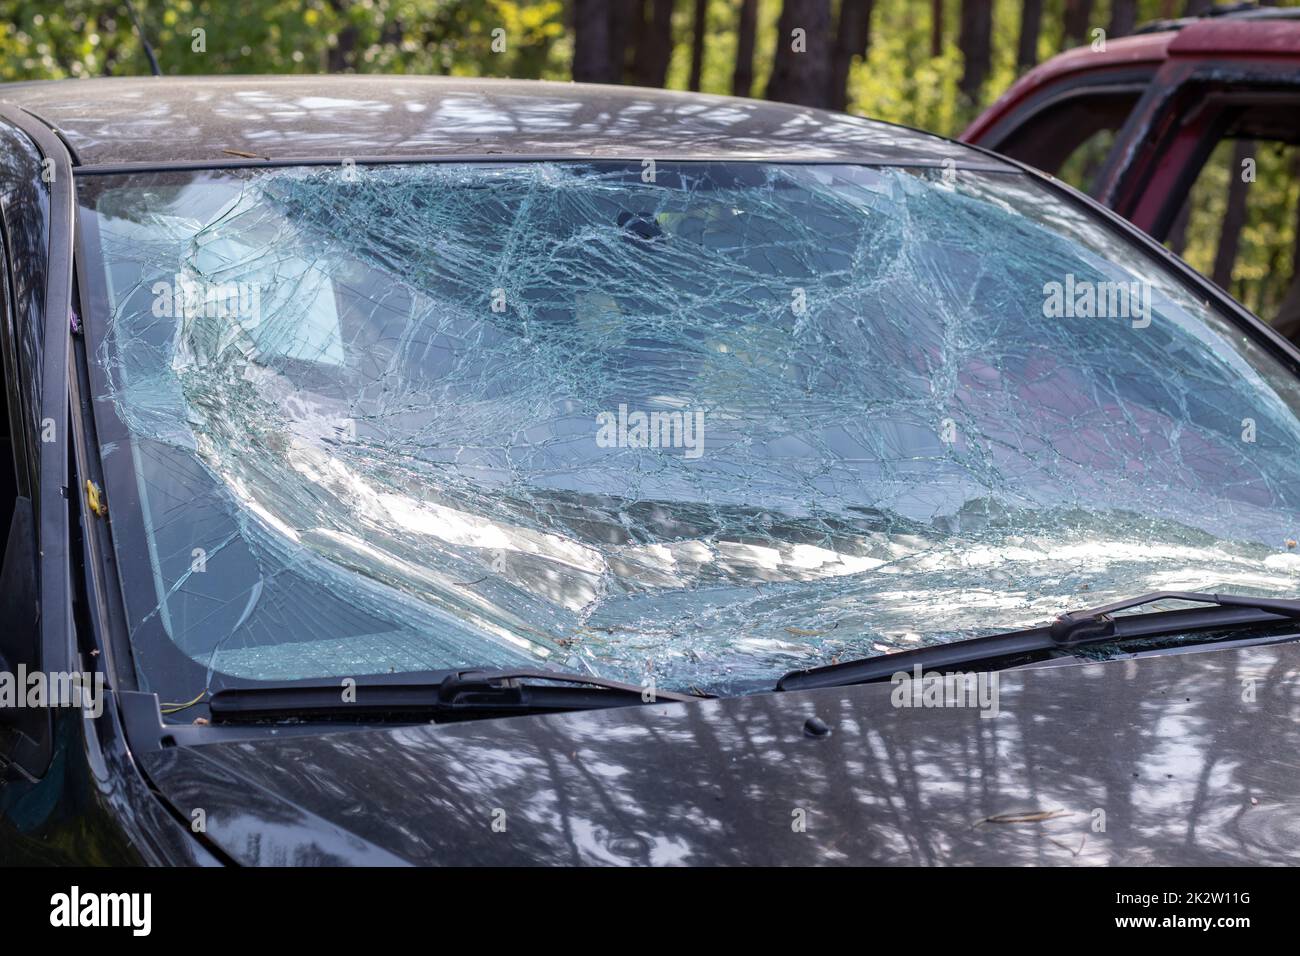 https://c8.alamy.com/comp/2K2W11G/close-up-of-a-car-with-a-broken-windshield-after-an-accident-automobile-danger-reckless-dangerous-driving-a-car-after-a-fatal-accident-with-a-pedestrian-ukraine-irpen-may-12-2022-2K2W11G.jpg